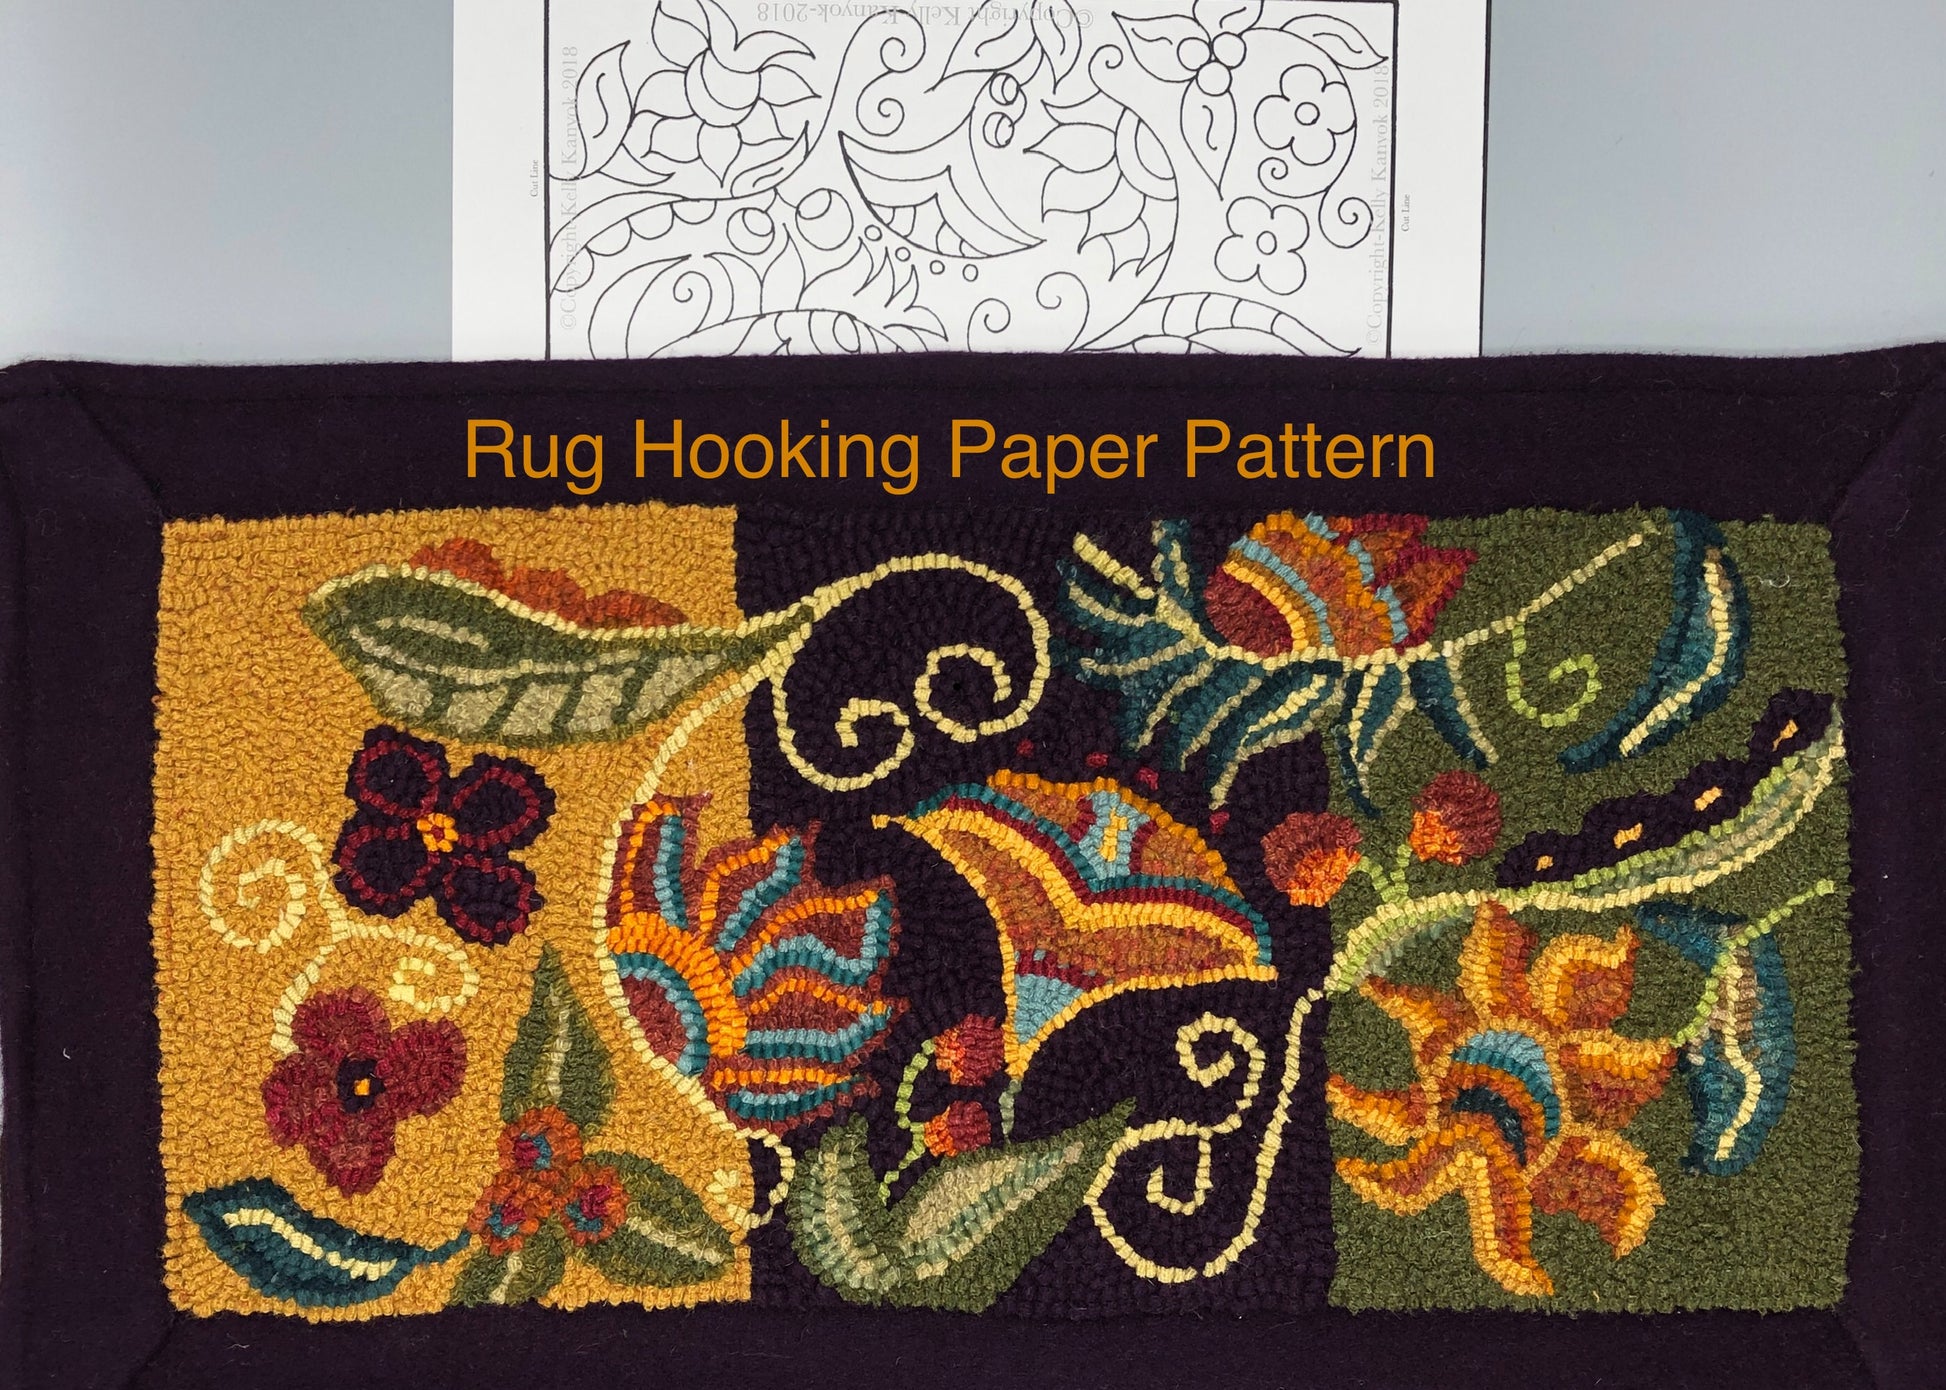 Awakening 818- Rug Hooking Paper Pattern, Floral Design, by Orphaned Wool